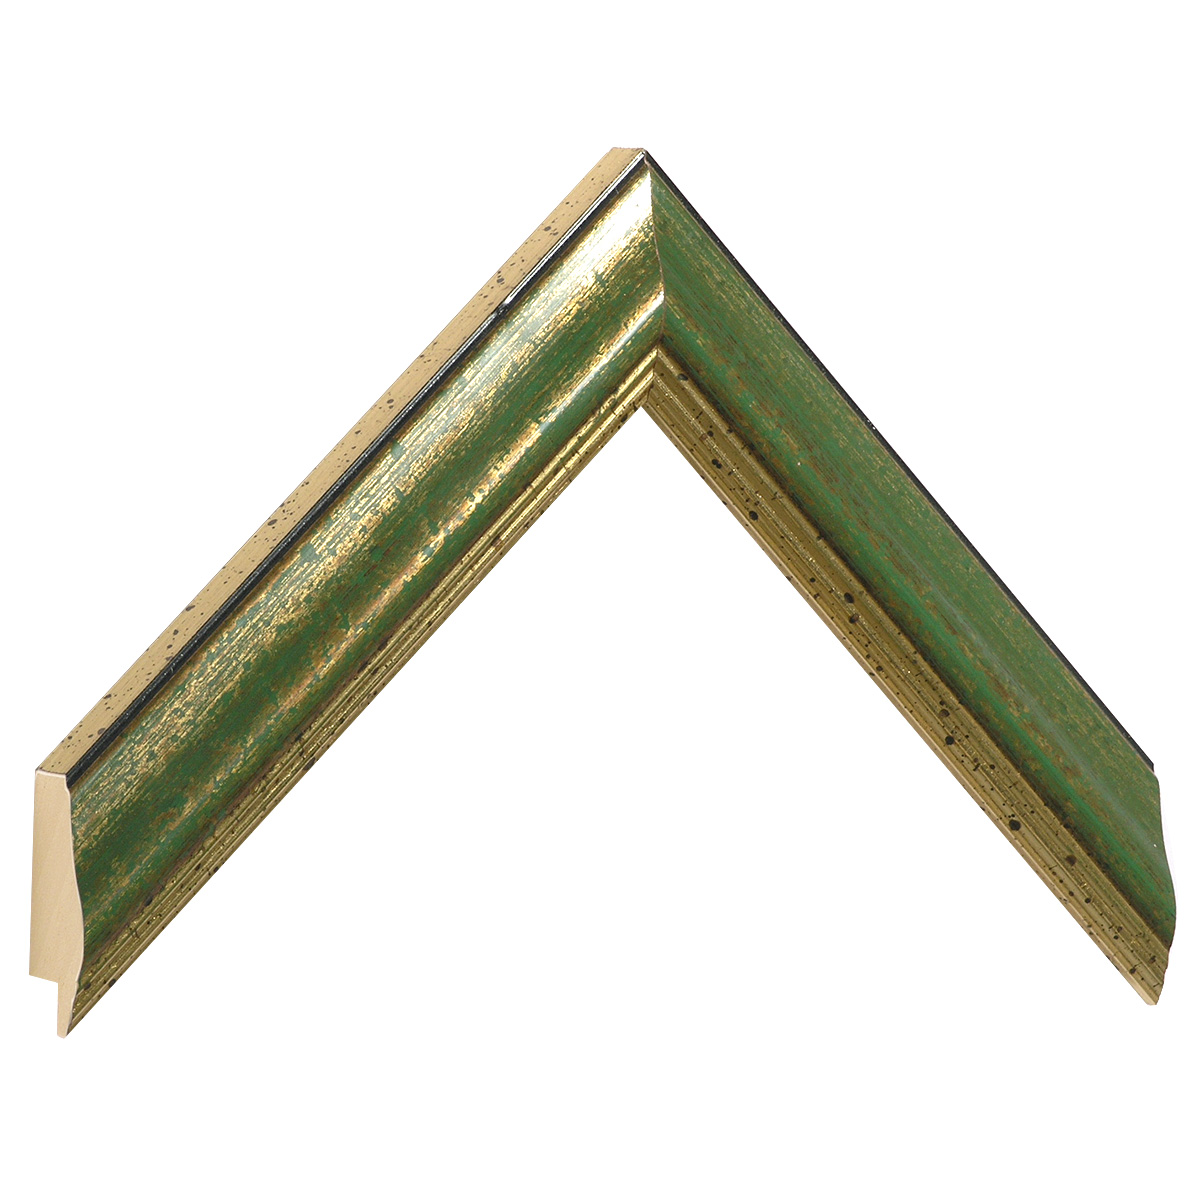 Asta ayous larg. mm 30 - finitura in oro con fascia verde - Campione